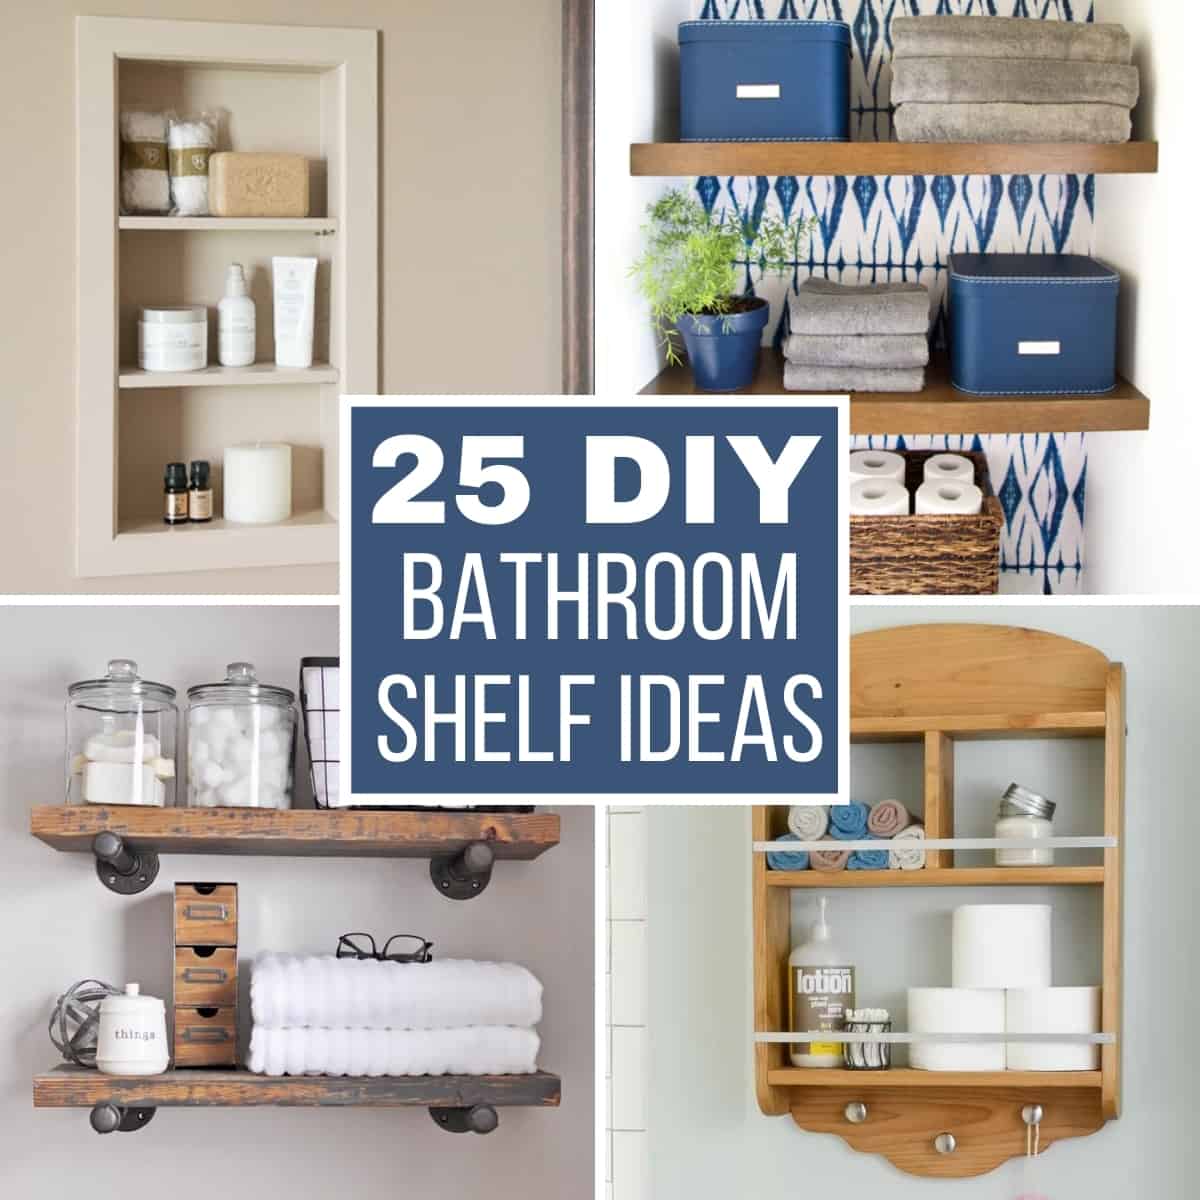 https://www.thehandymansdaughter.com/wp-content/uploads/2021/10/25-DIY-Bathroom-Shelf-Ideas-square.jpg